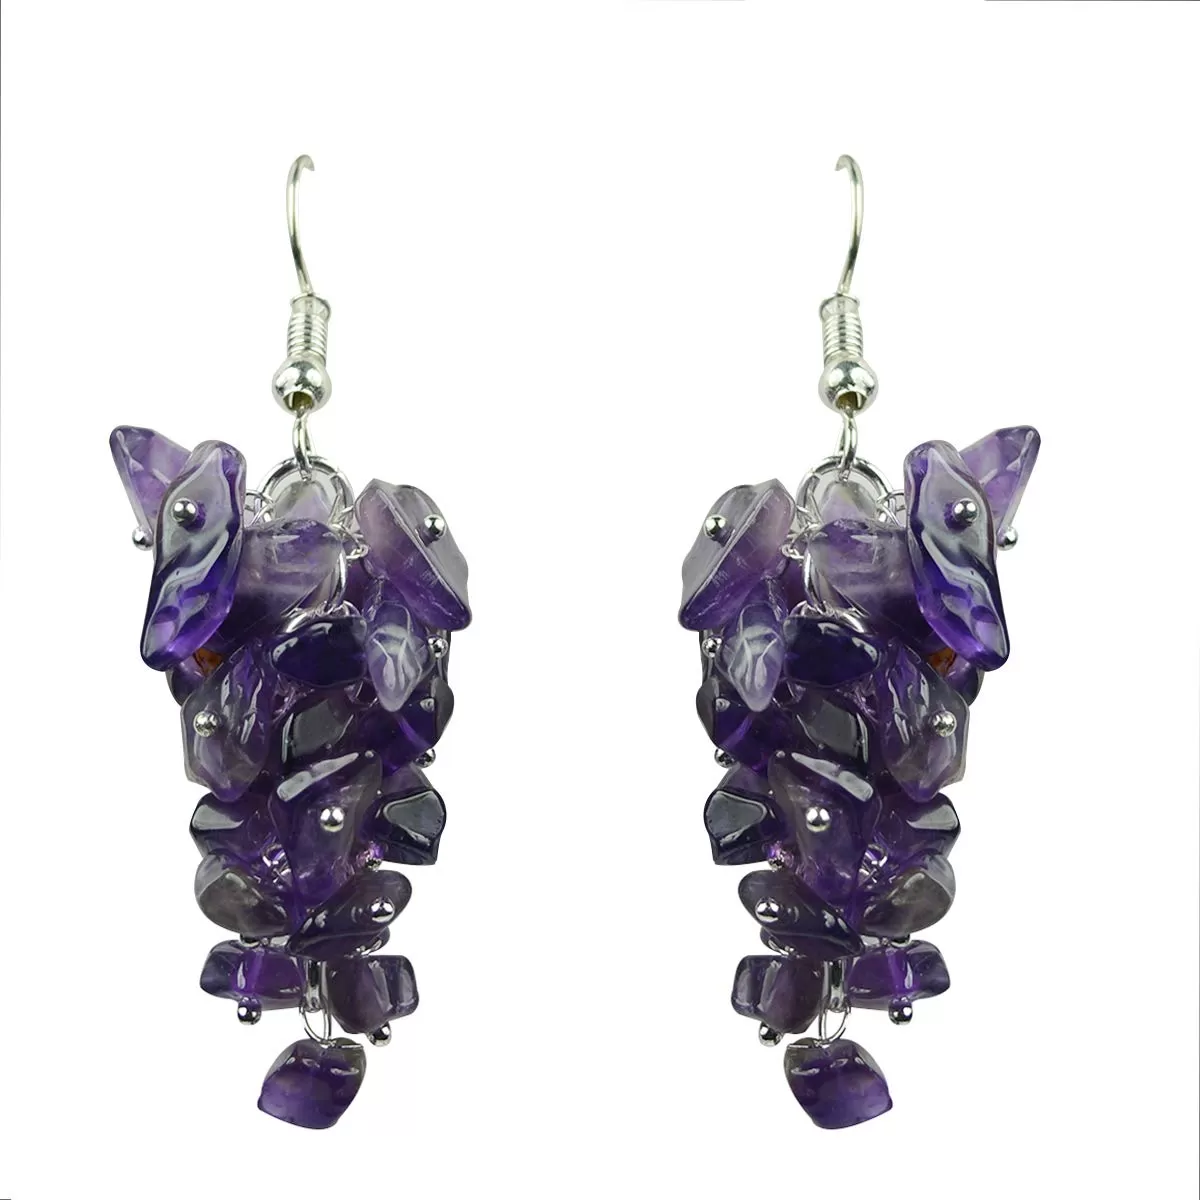 Amethyst Earrings Natural Chip Beads Earrings for Women, Girls (Purple)